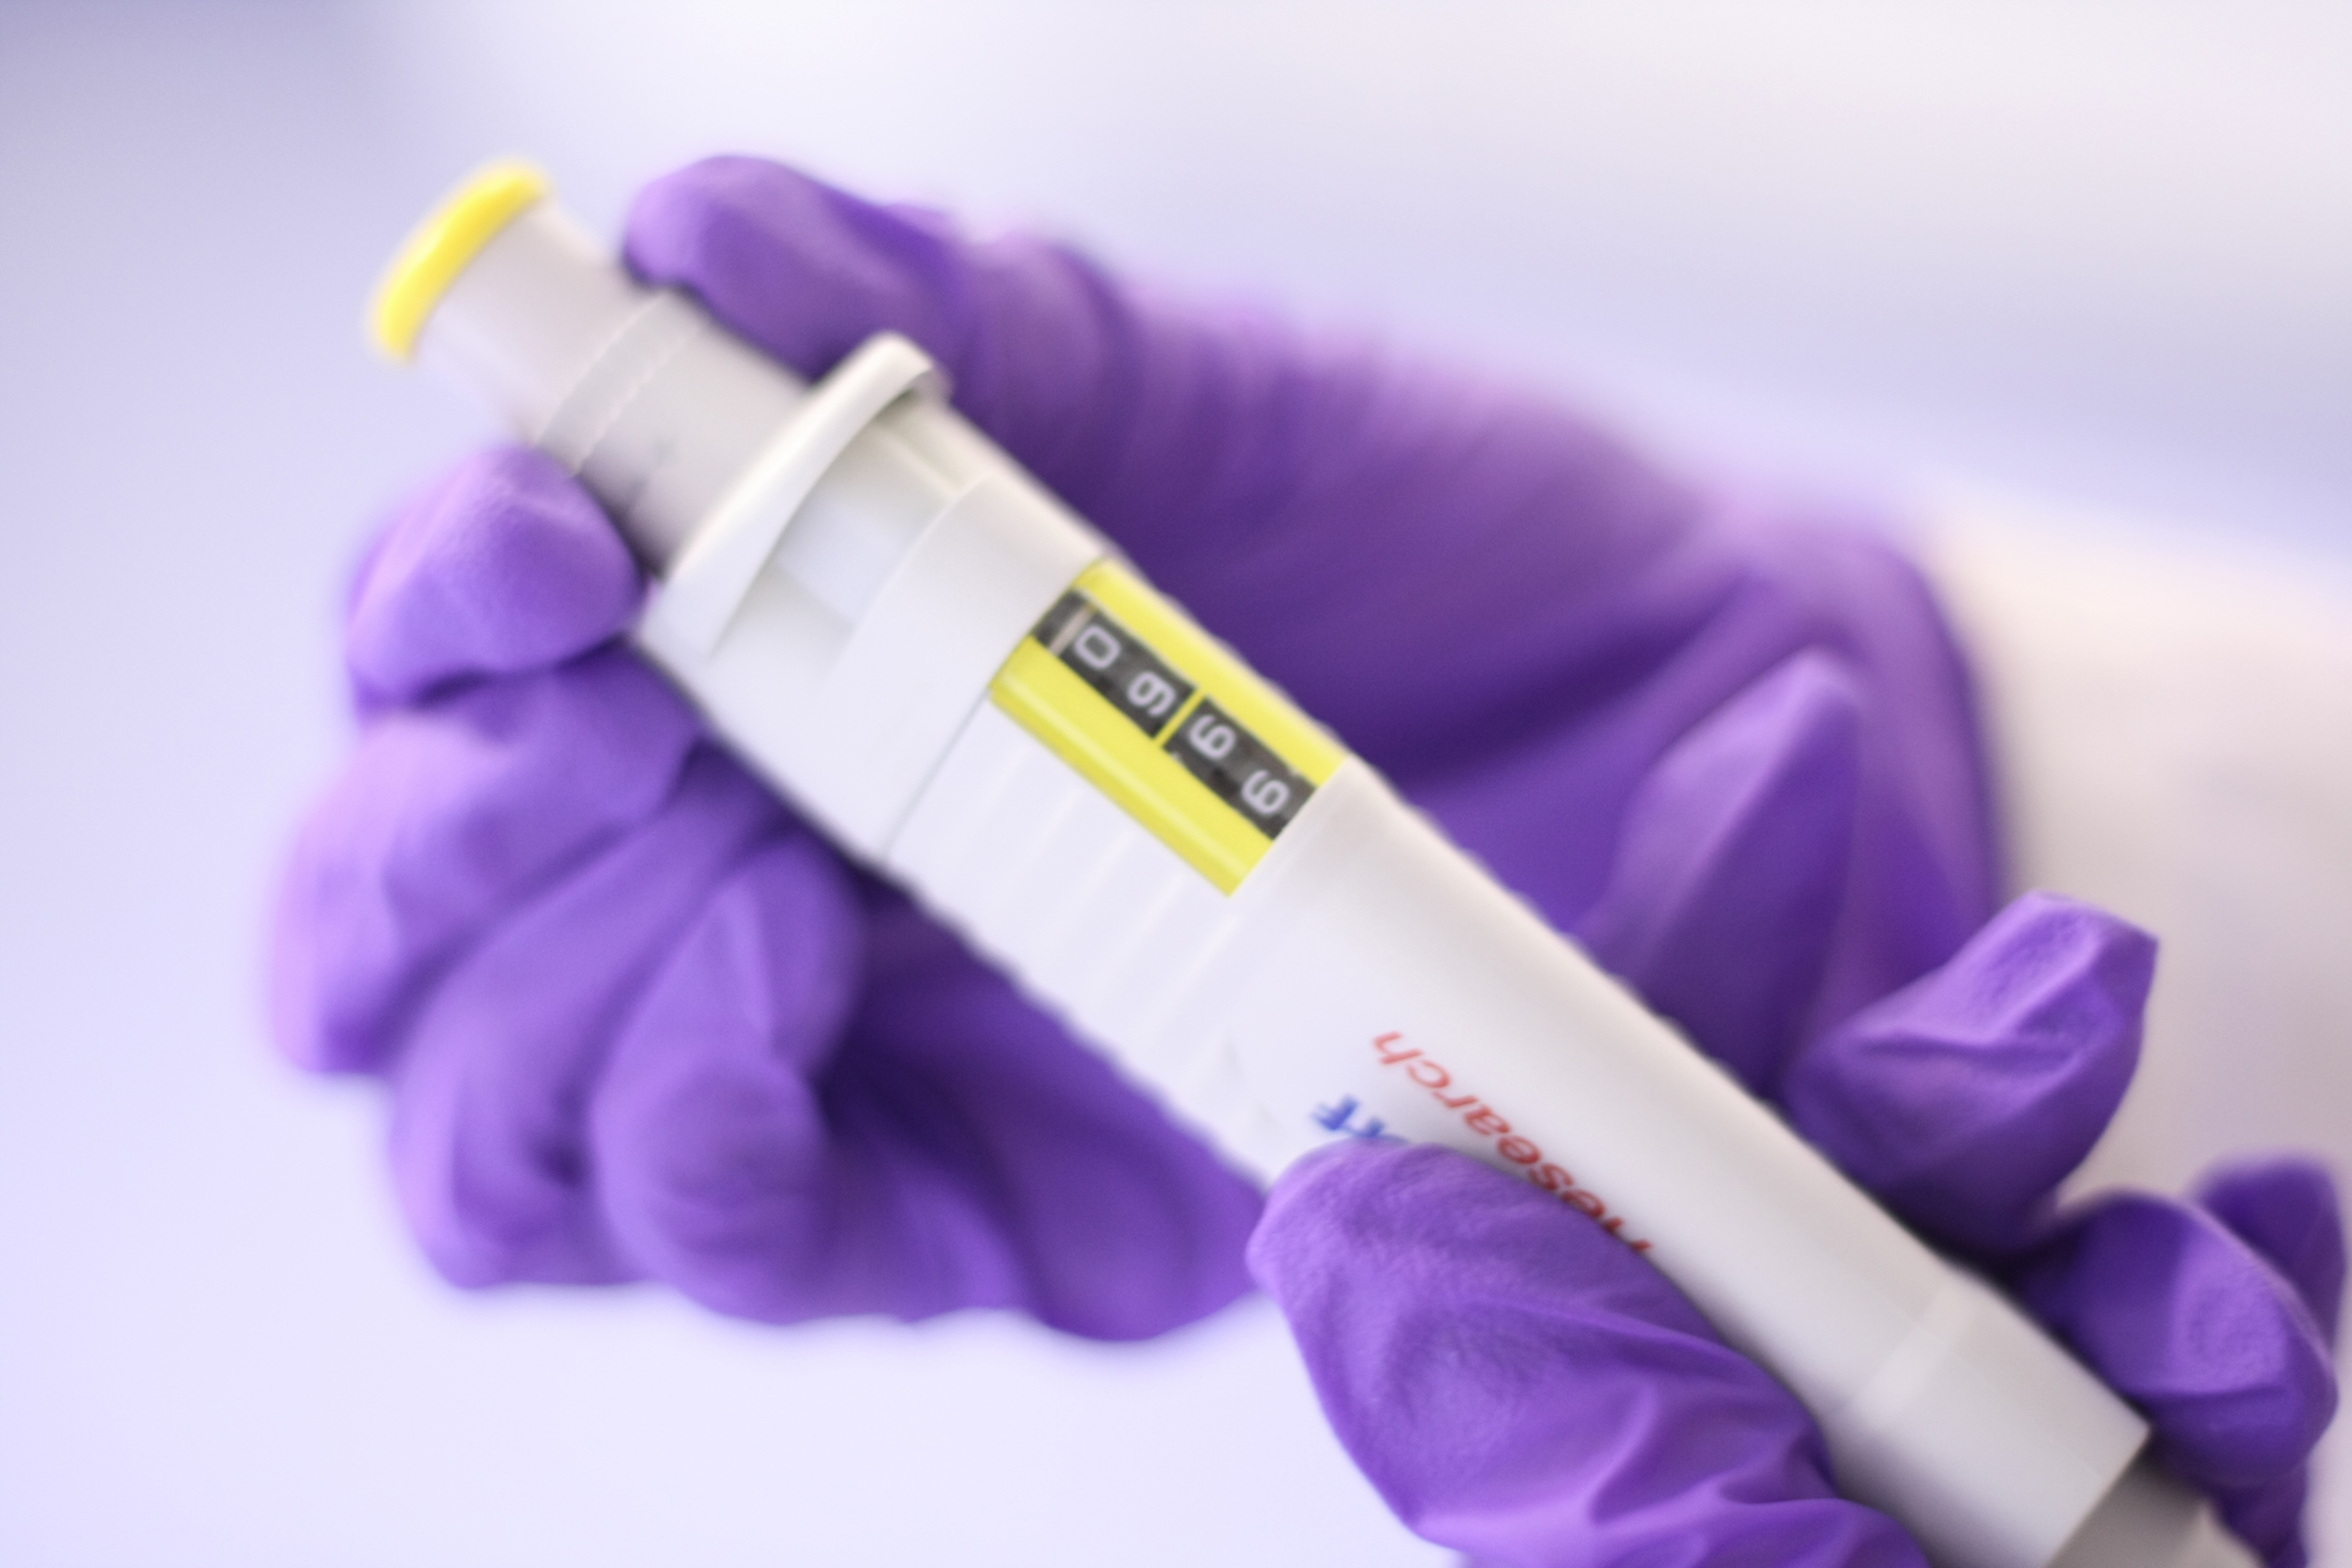 UKAS accredited laboratory testing